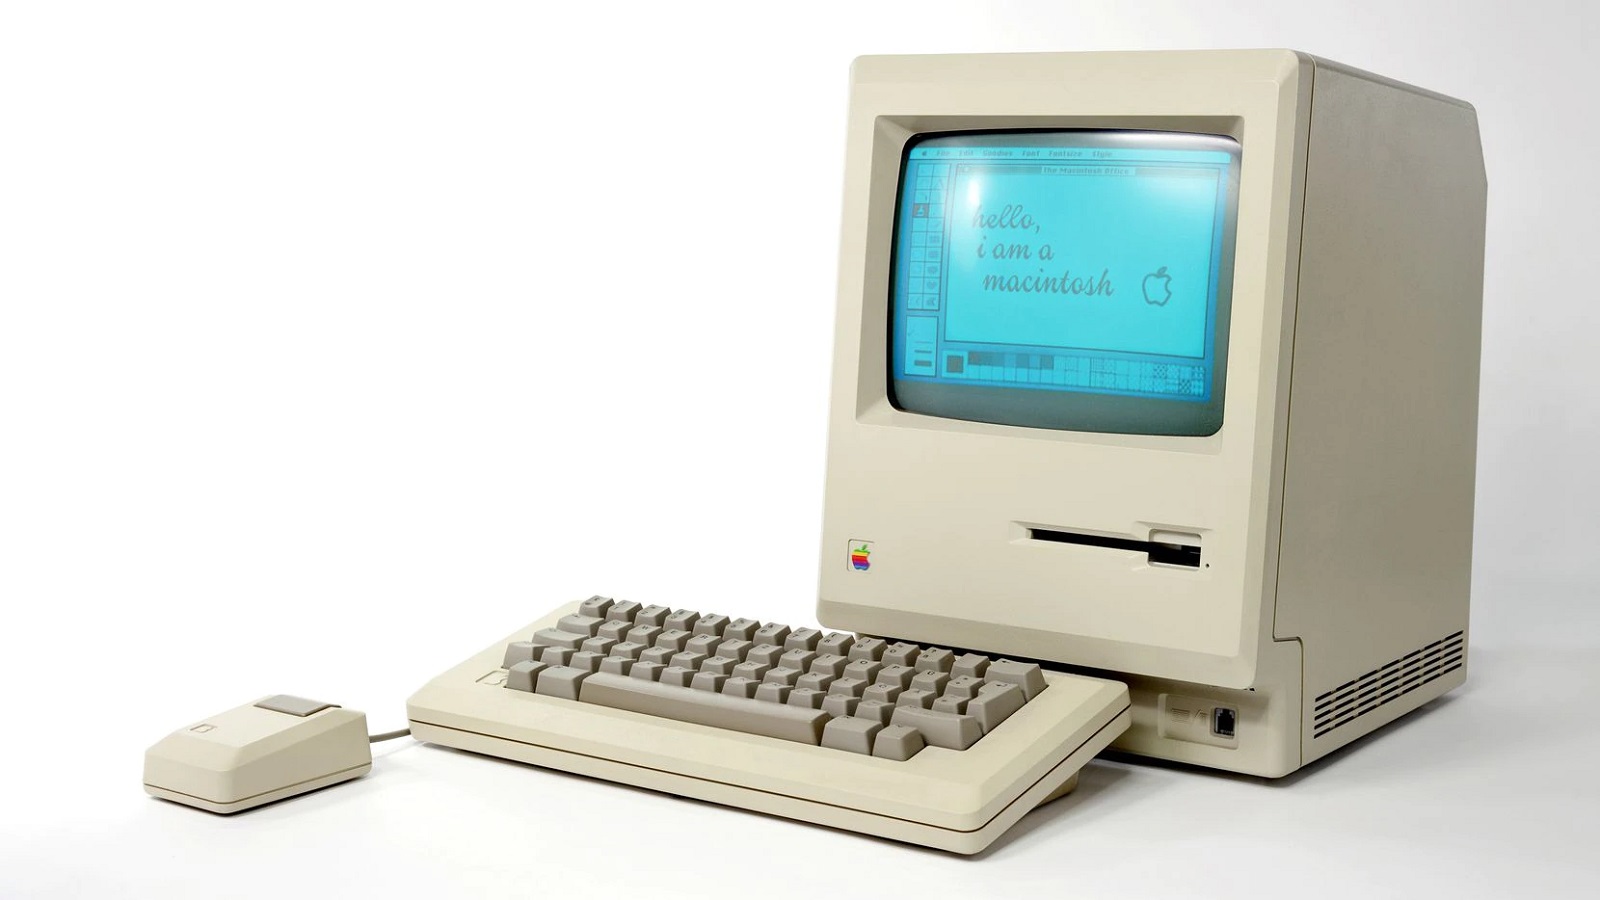 Classic Apple Macintosh